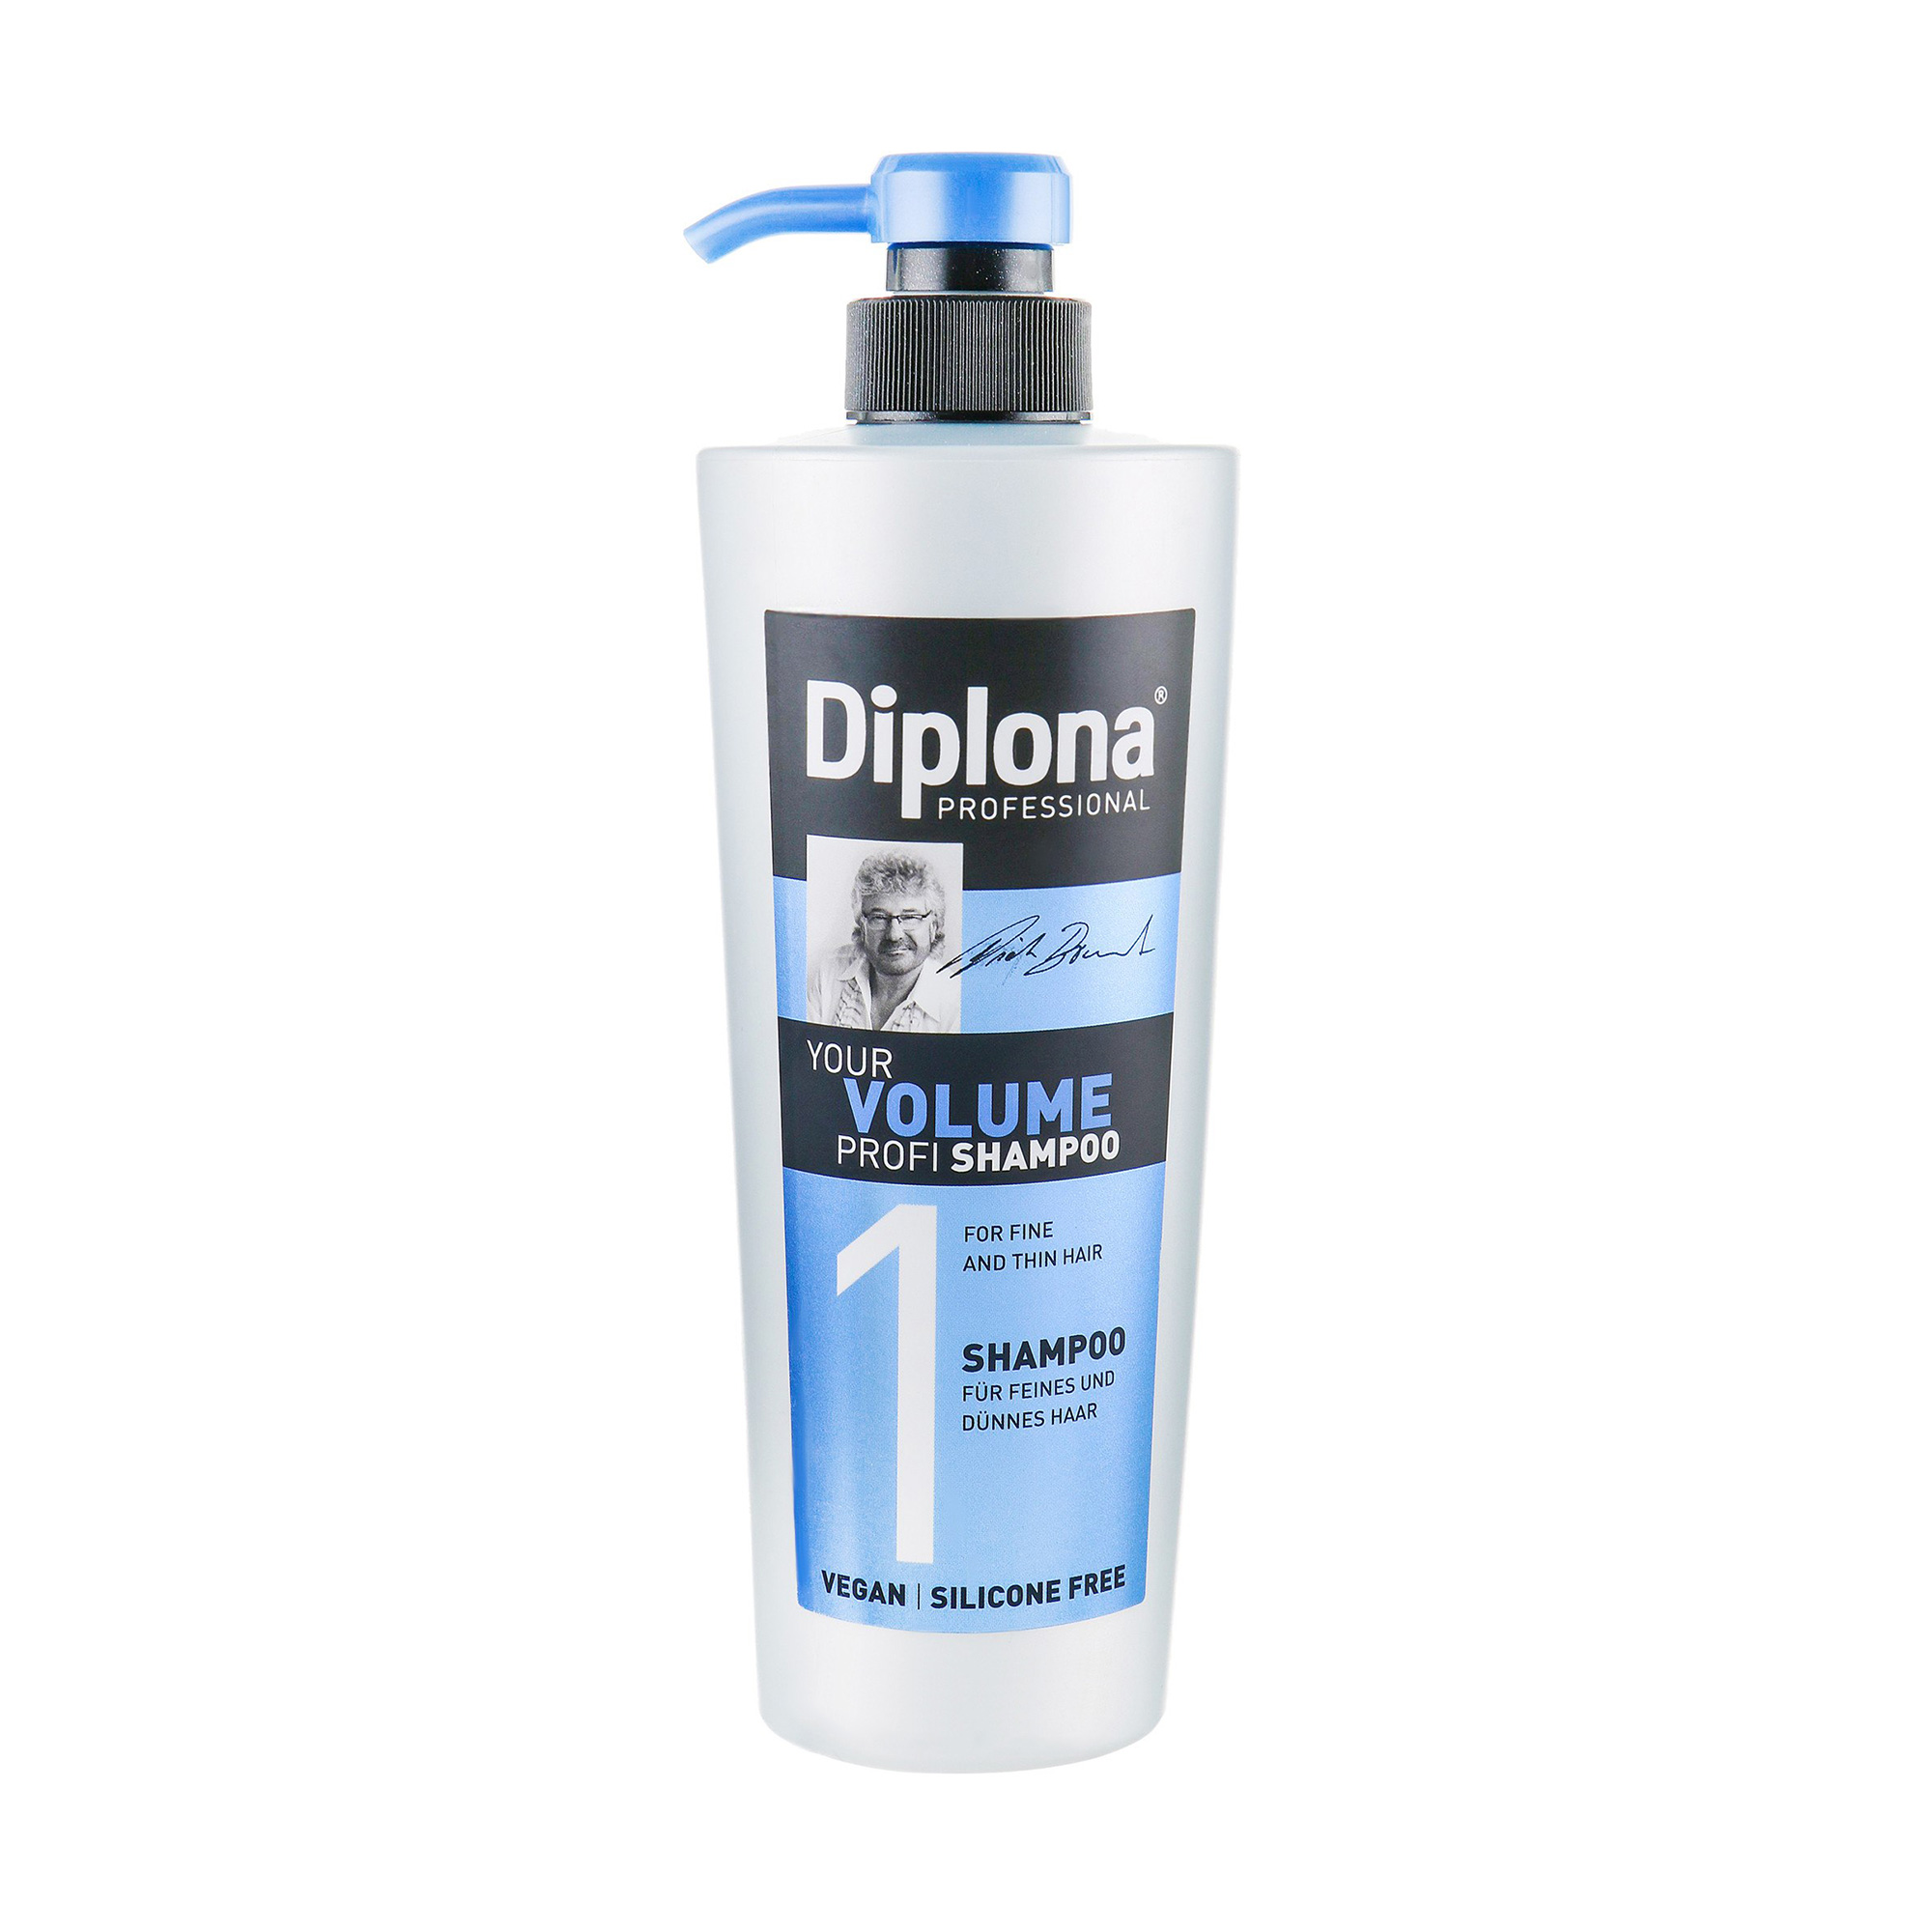 Шампунь Diplona Volume Profi shampoo (Германия, 600 мл).